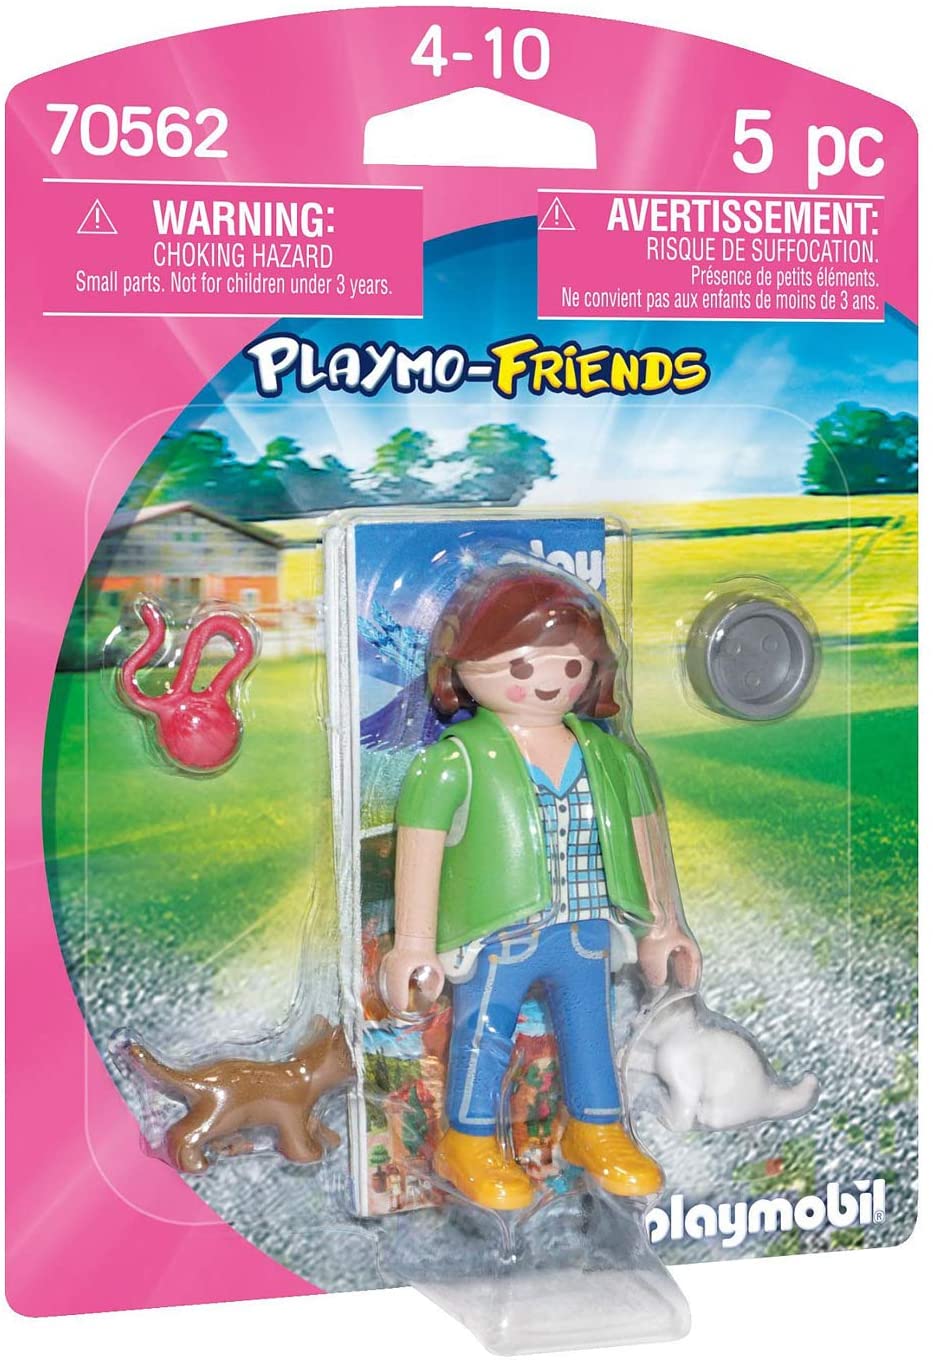 Playmobil 70562 Playmo-Friends Boy mit RC Car, für Kinder ab 4 Jahren